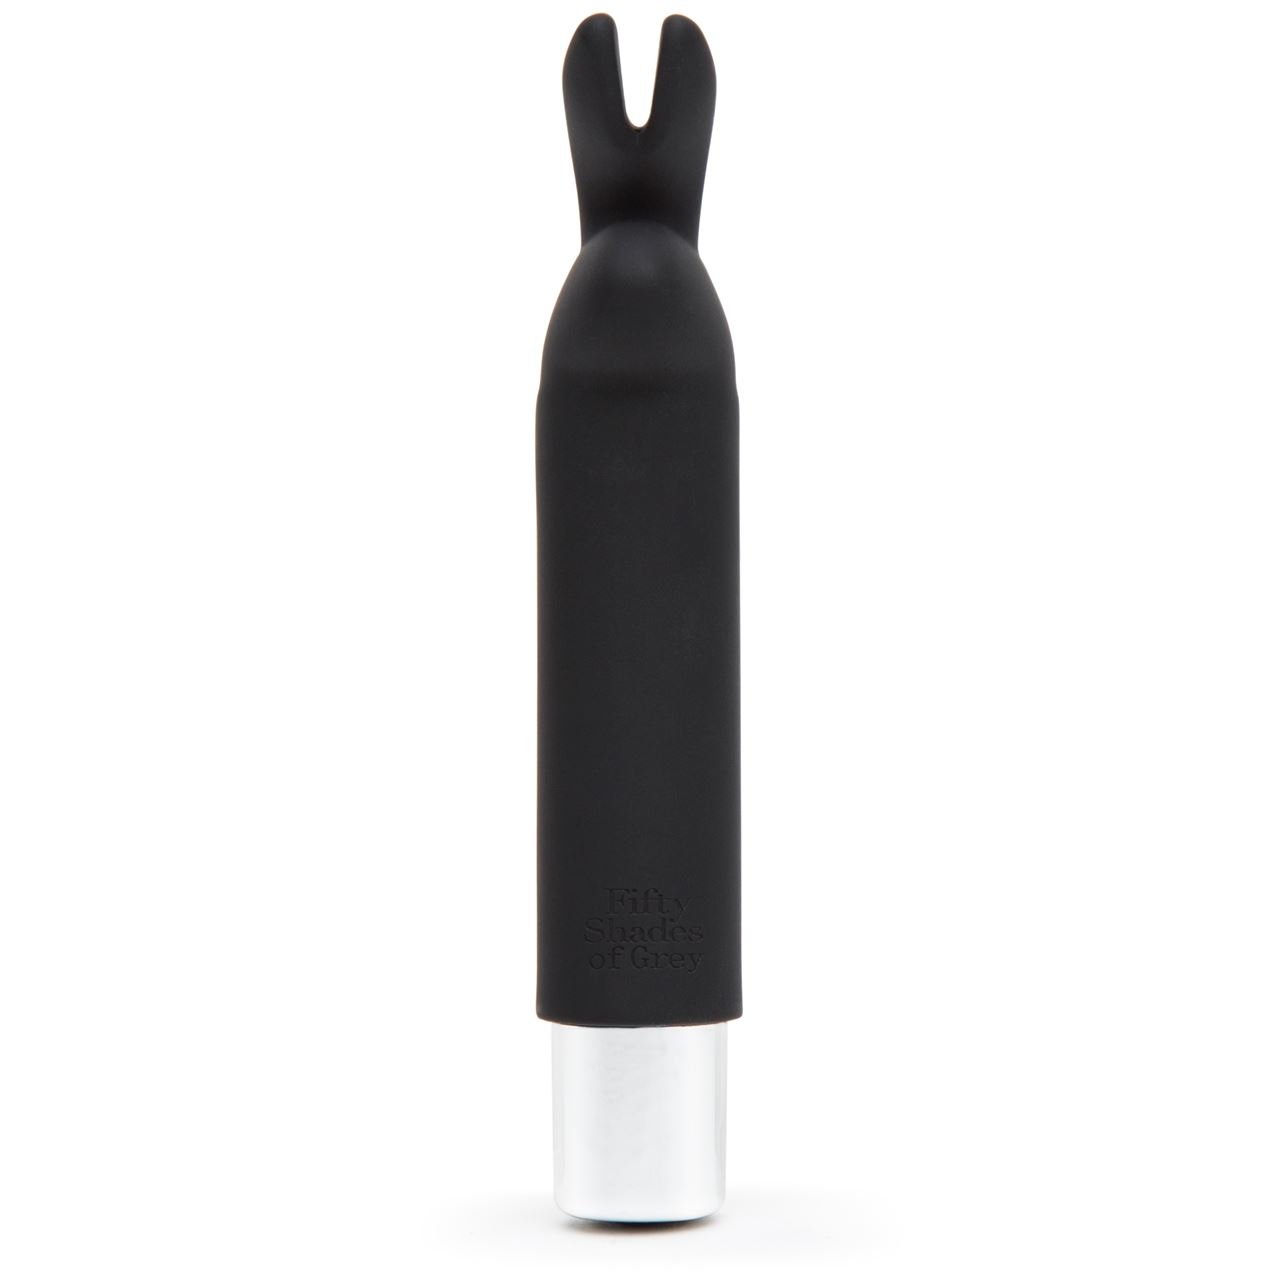 0020180_fifty-shades-of-grey-greedy-girl-rechargeable-bullet-rabbit-vibrator.jpeg